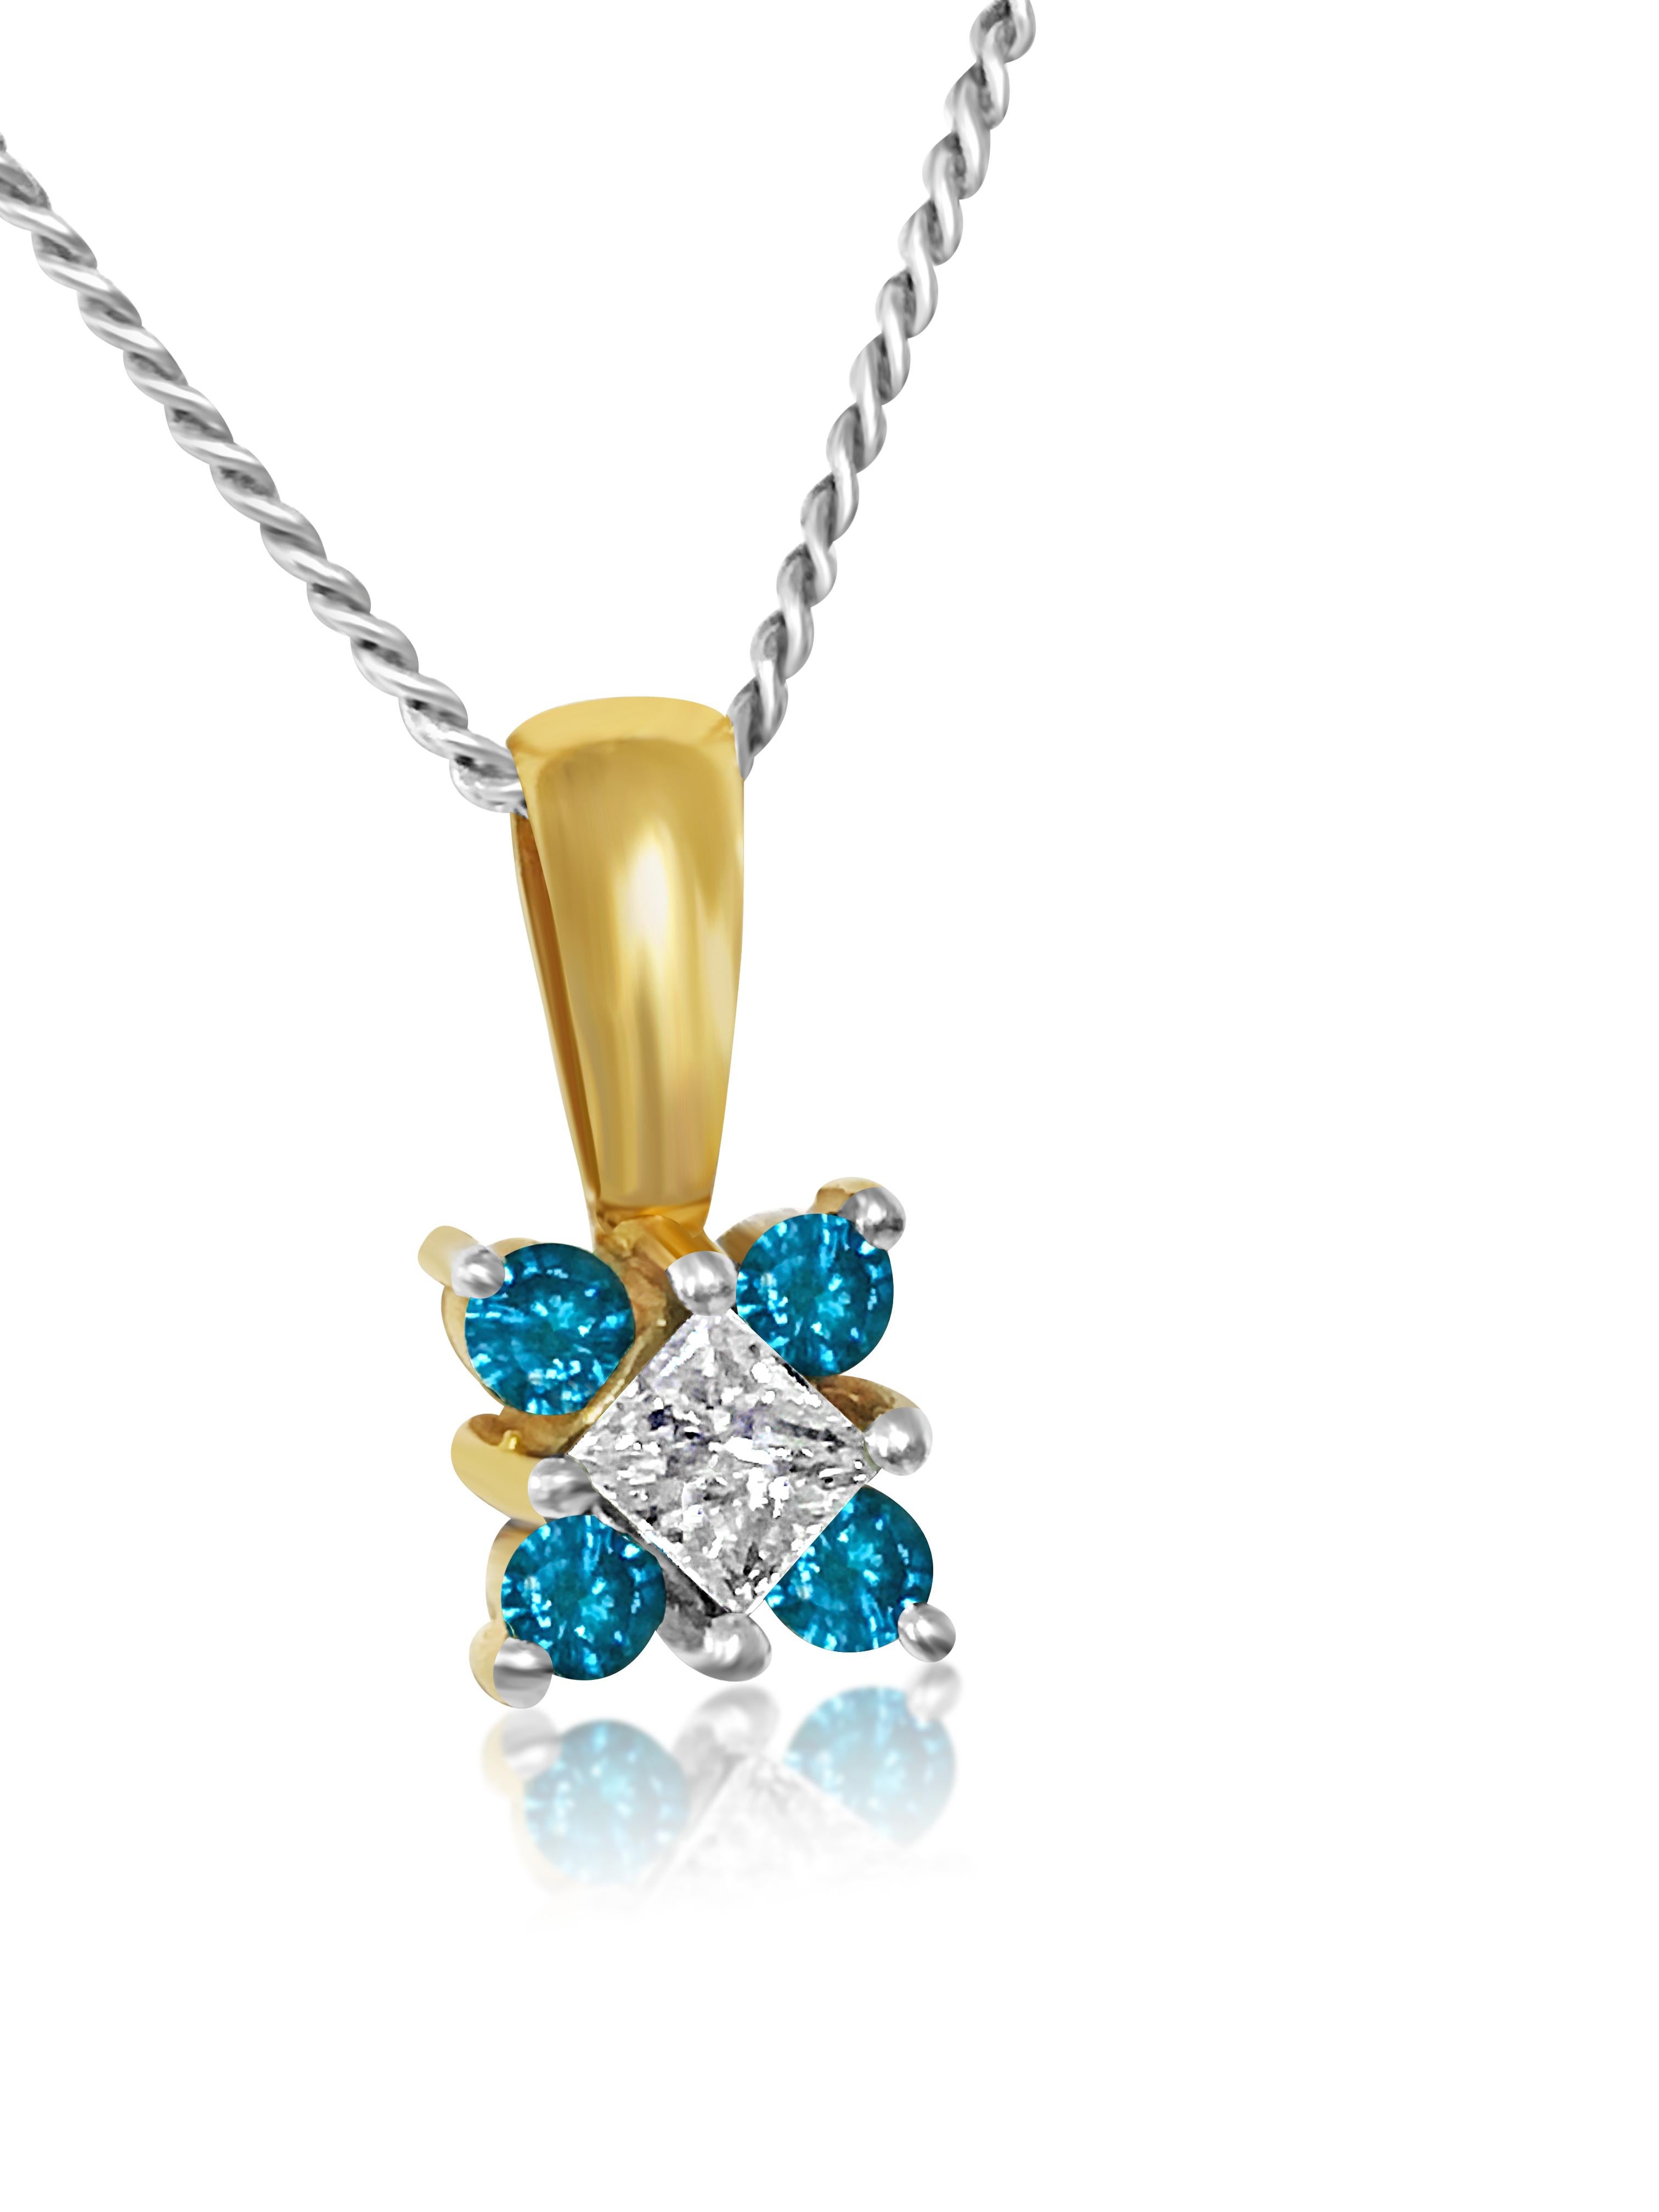 Brilliant Cut 0.60 carat diamond & Blue Diamond in 14k gold pendant. For Sale